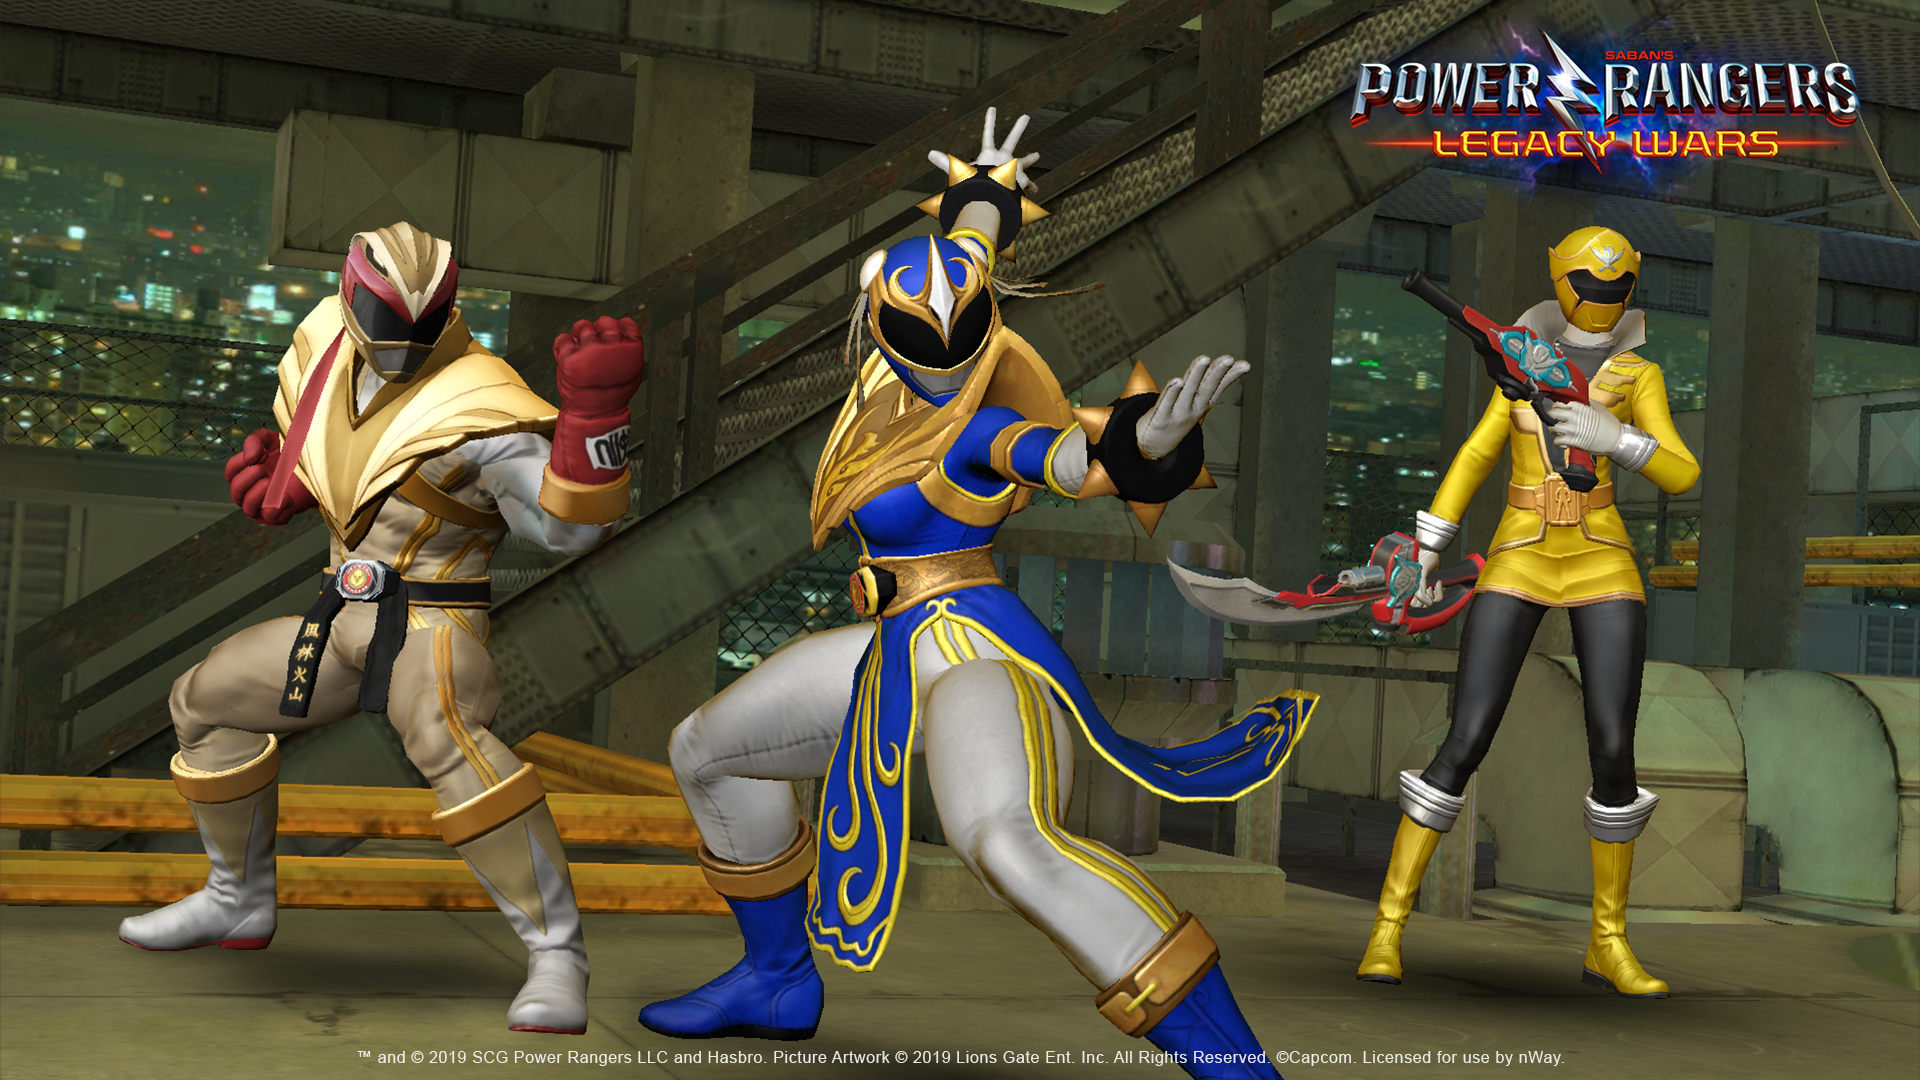 Playstation 2: Power Rangers Dino Thunder - Geek-Is-Us